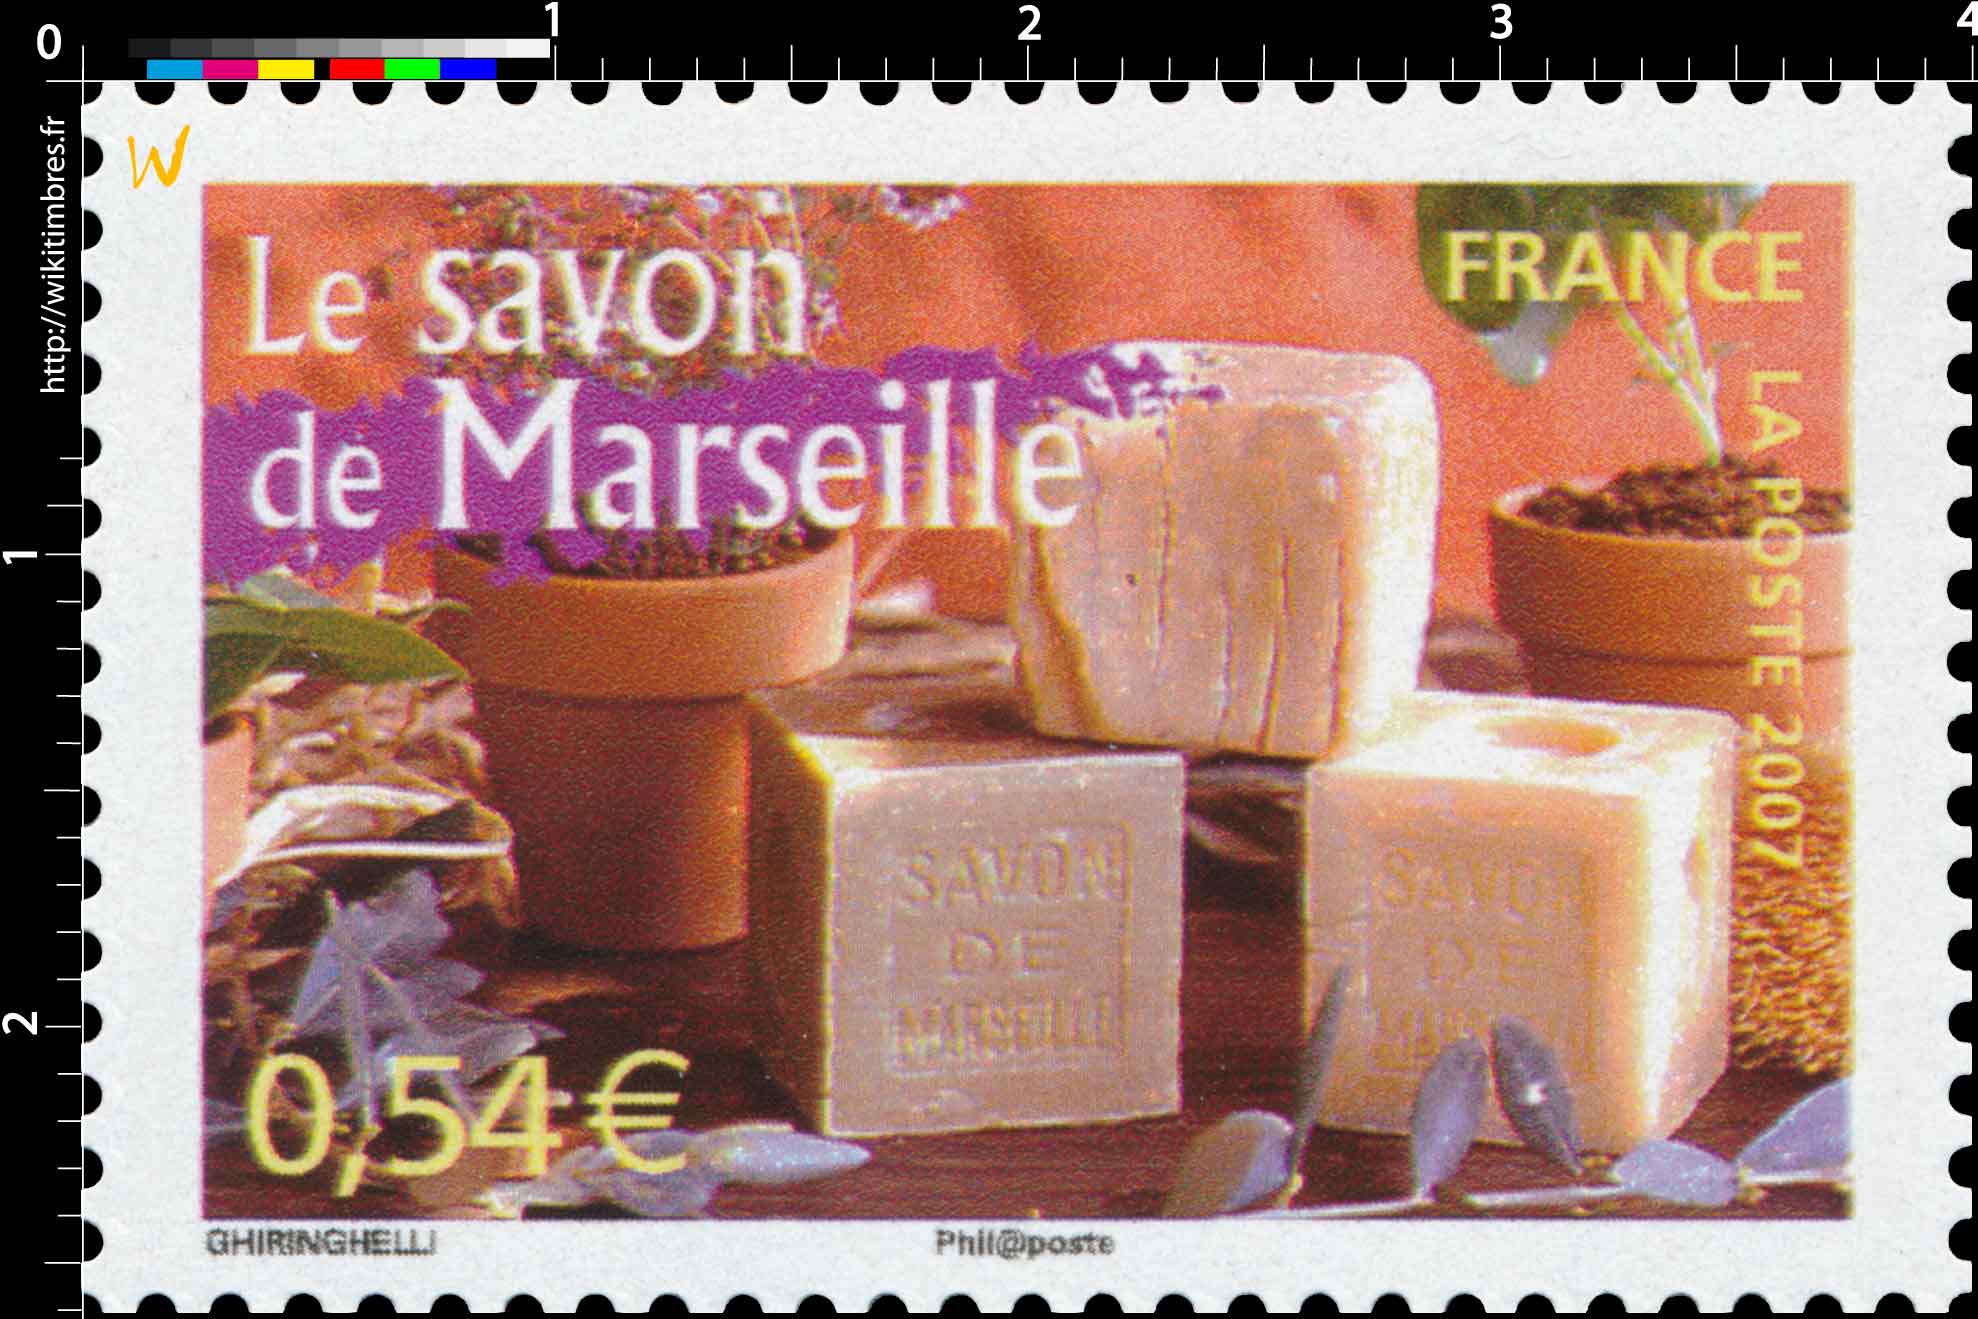 2007 Le savon de Marseille